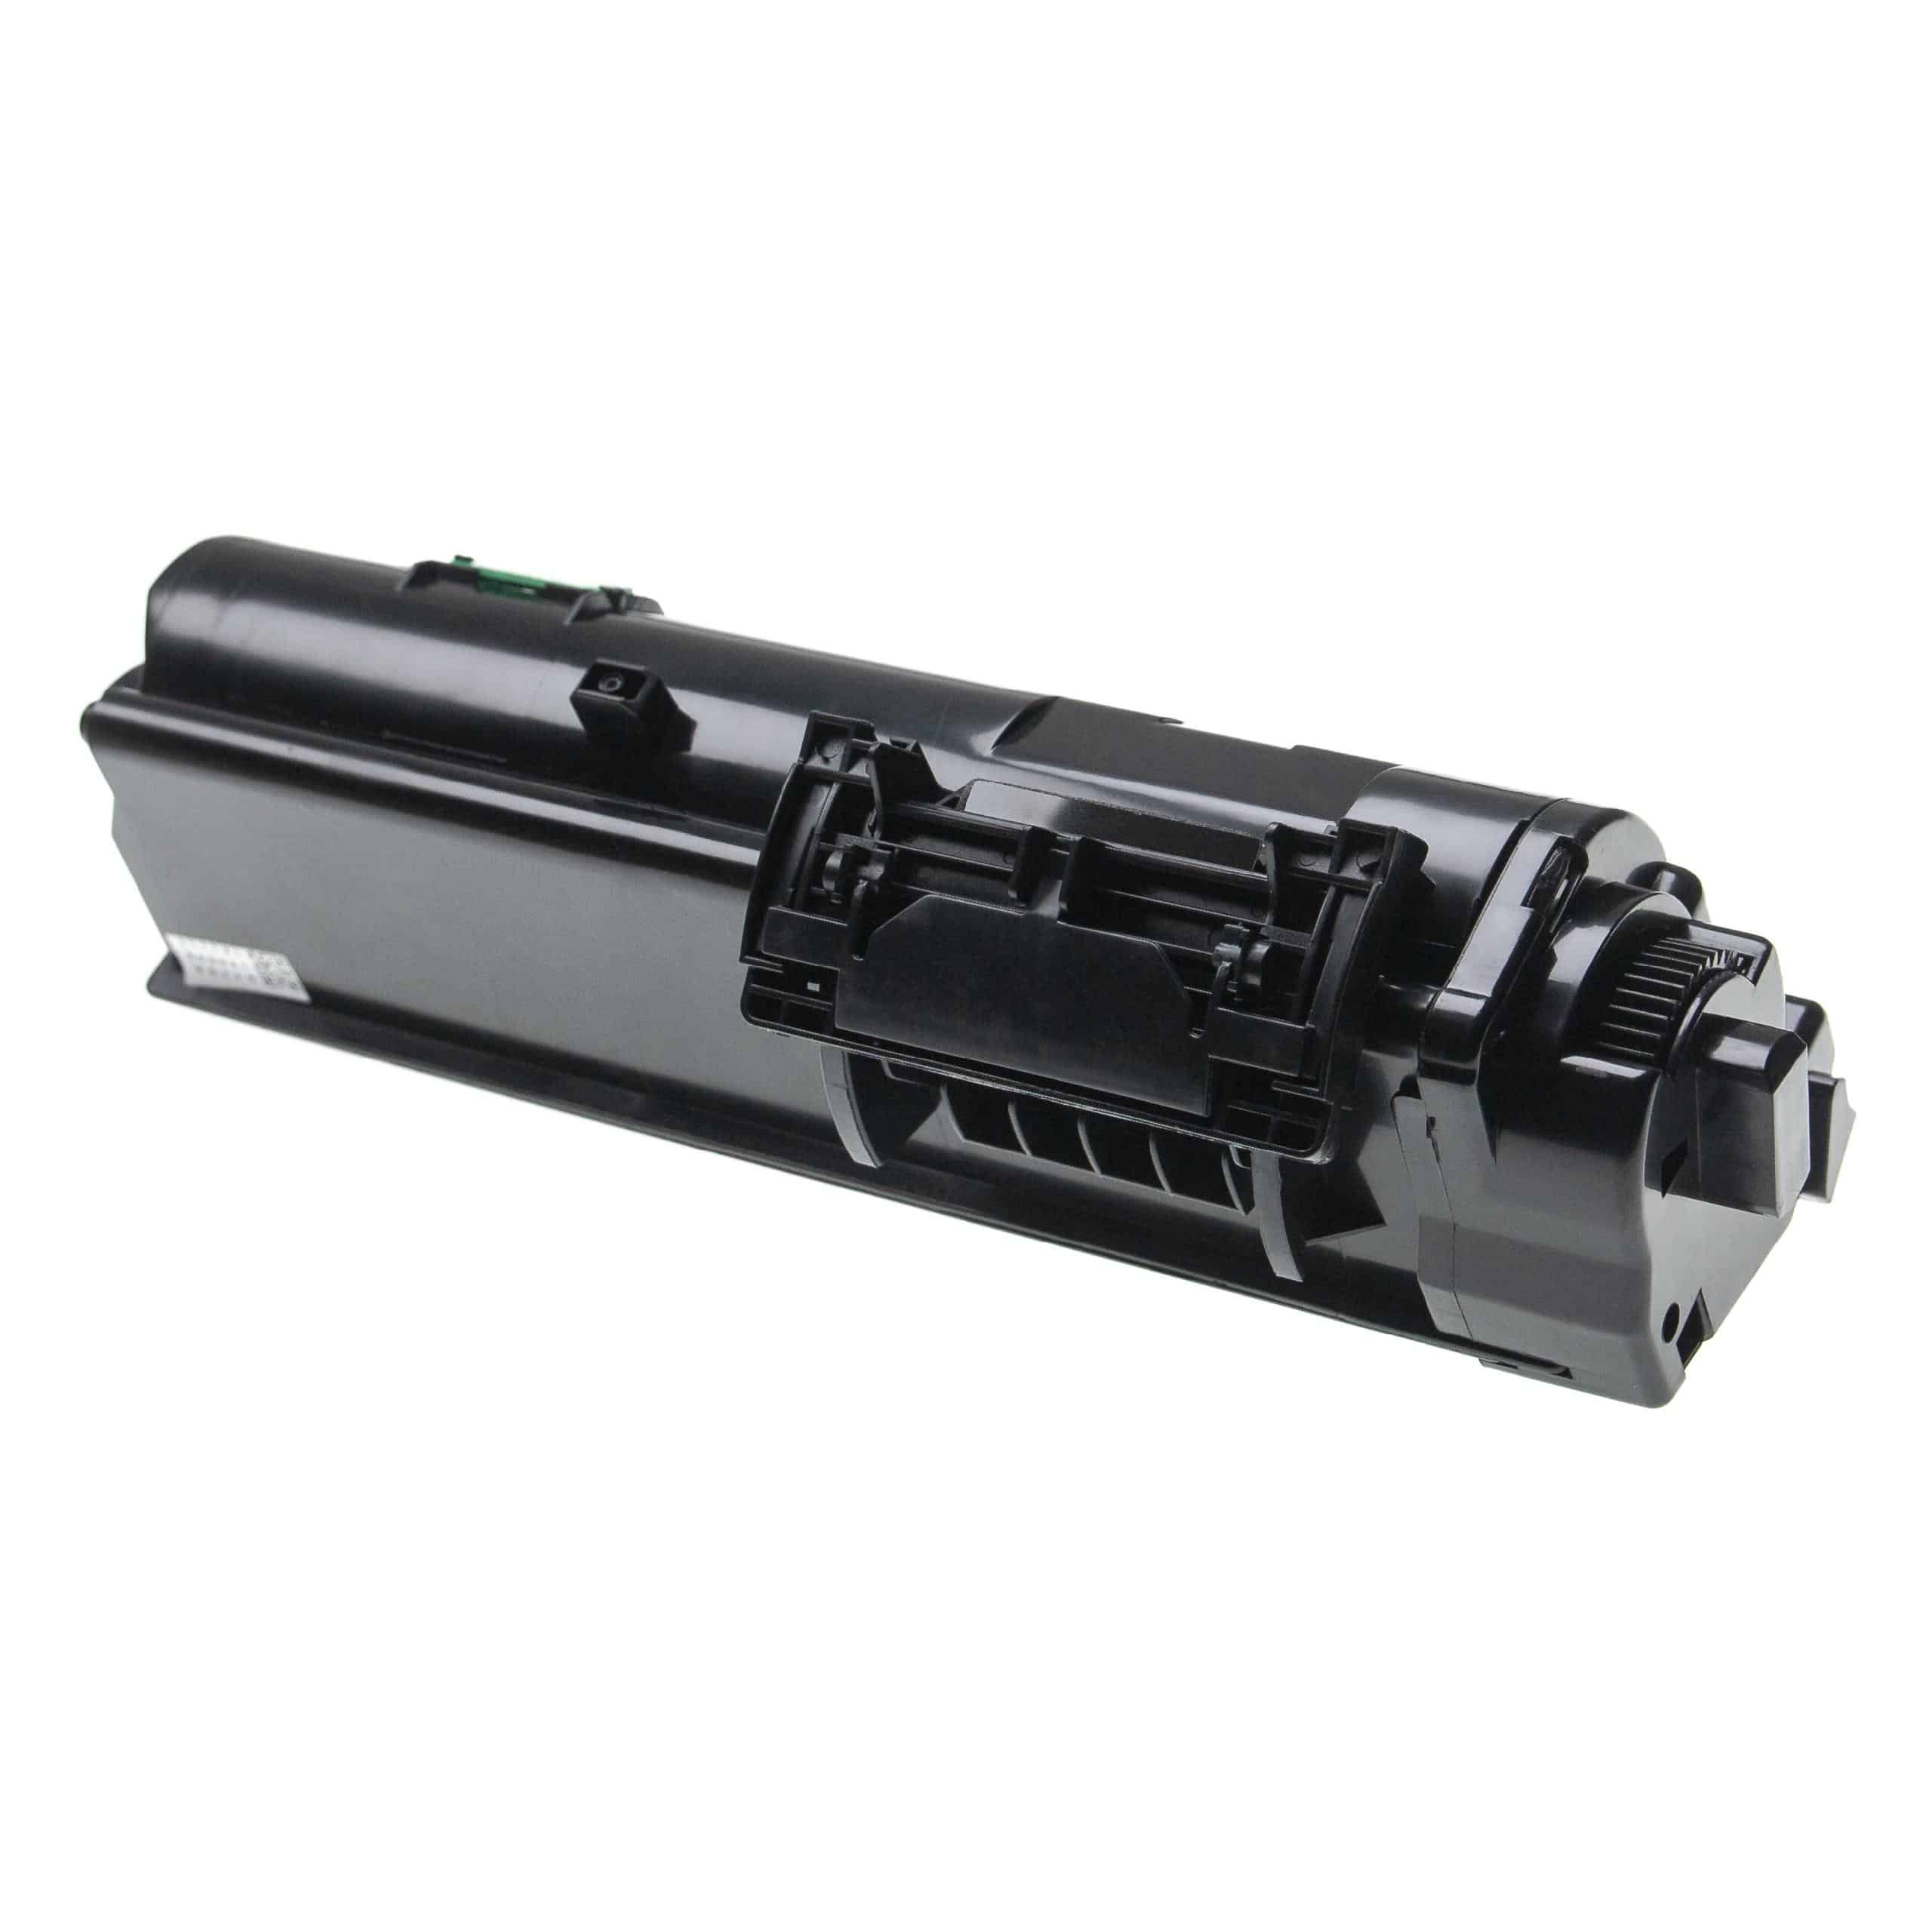 3x Toner replaces Kyocera TK-1150 for Kyocera Printer, Black